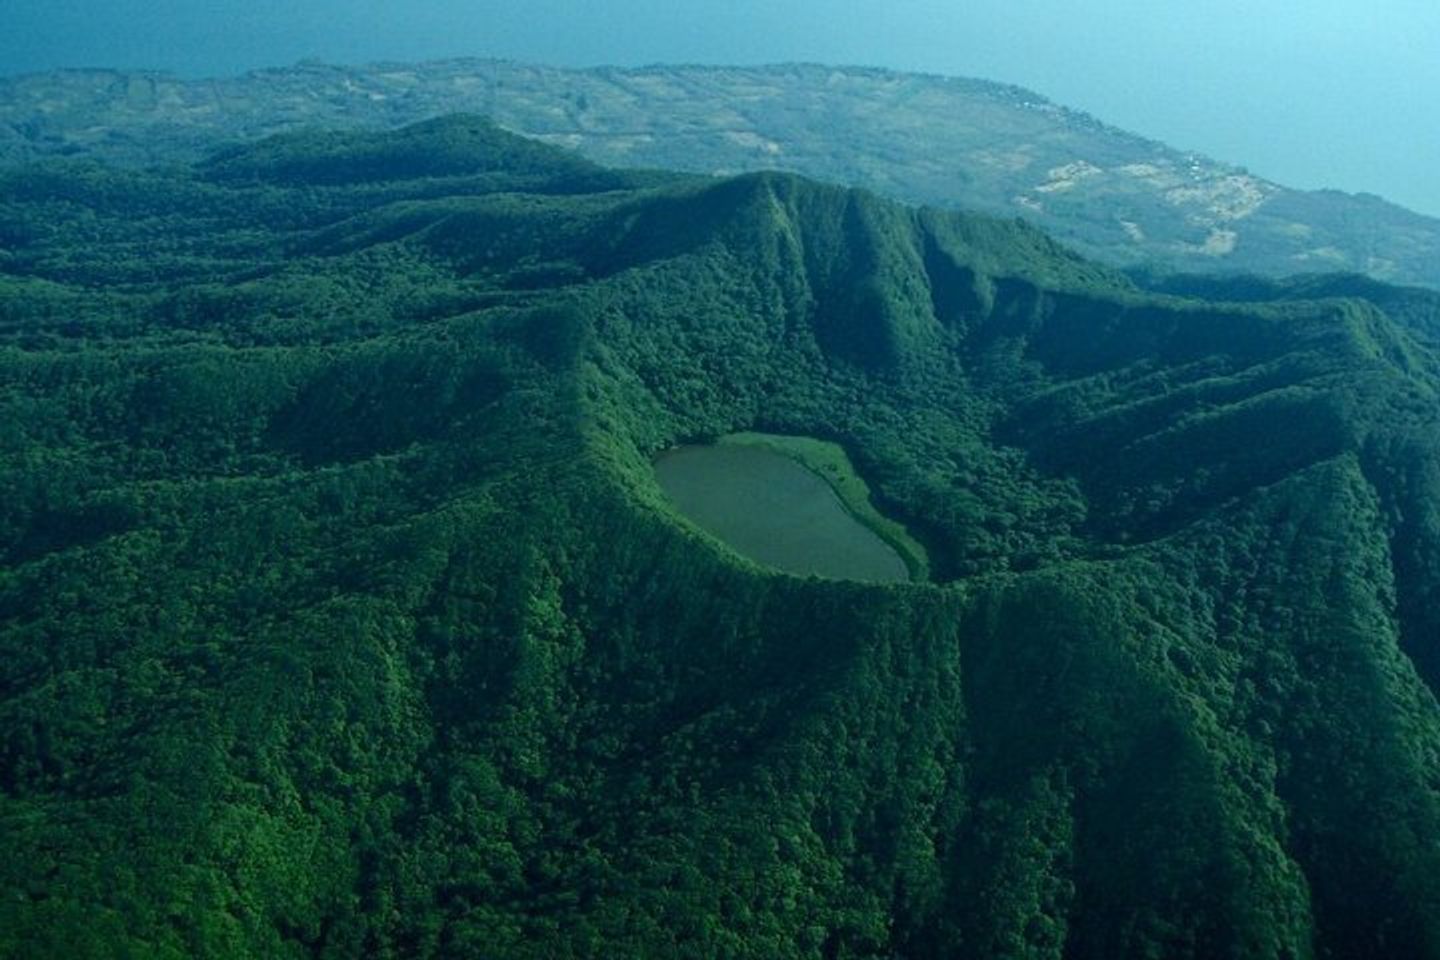 Maderas Volcano